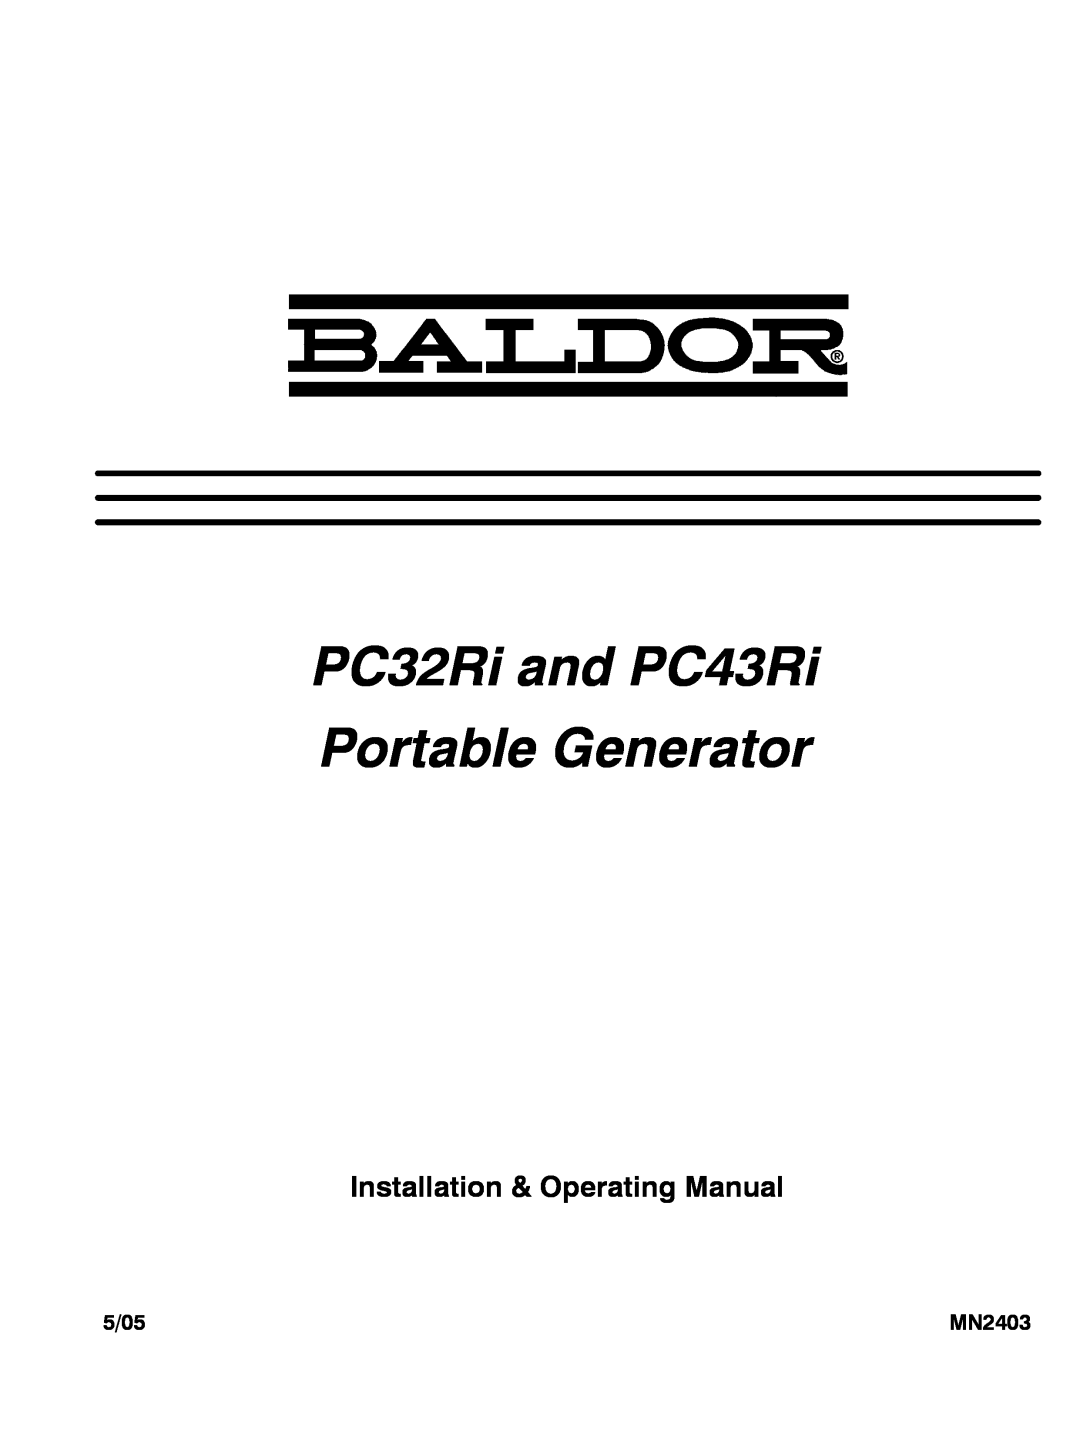 Baldor PC32RI, PC43RI manual PC32Ri and PC43Ri, Portable Generator, Installation & Operating Manual, 5/05, MN2403 